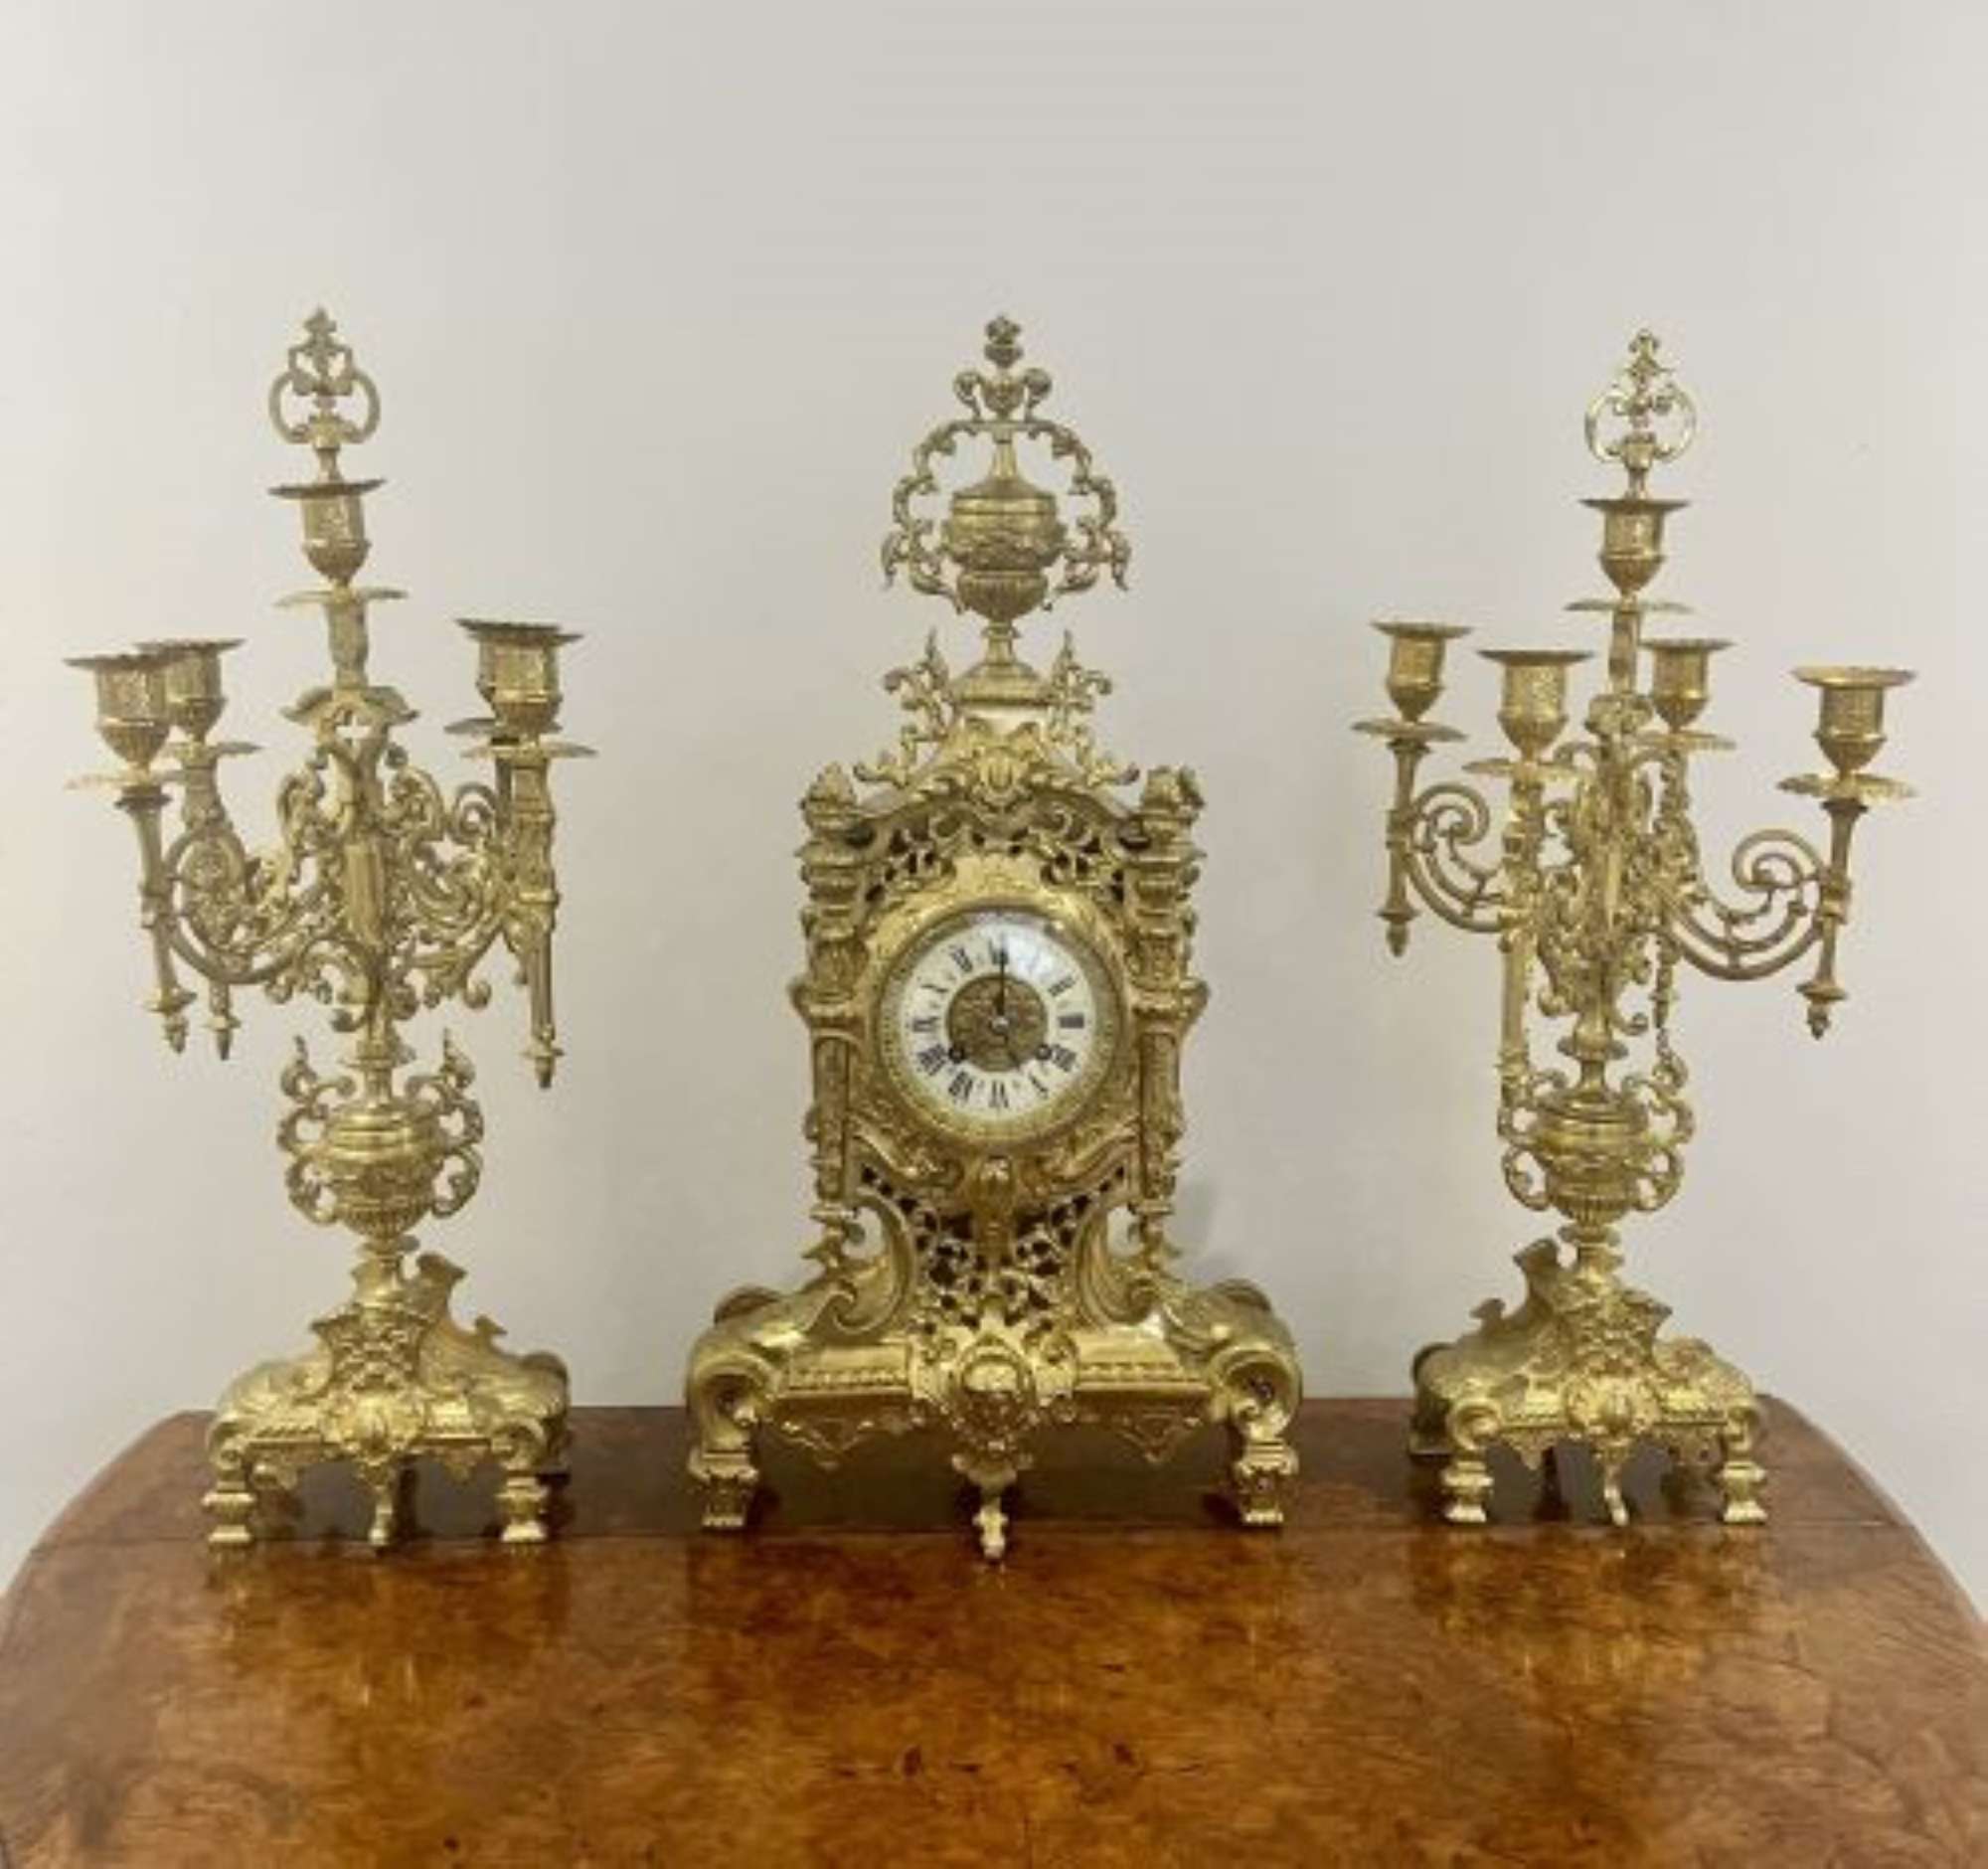 Stunning quality French antique Victorian ornate brass clock garniture